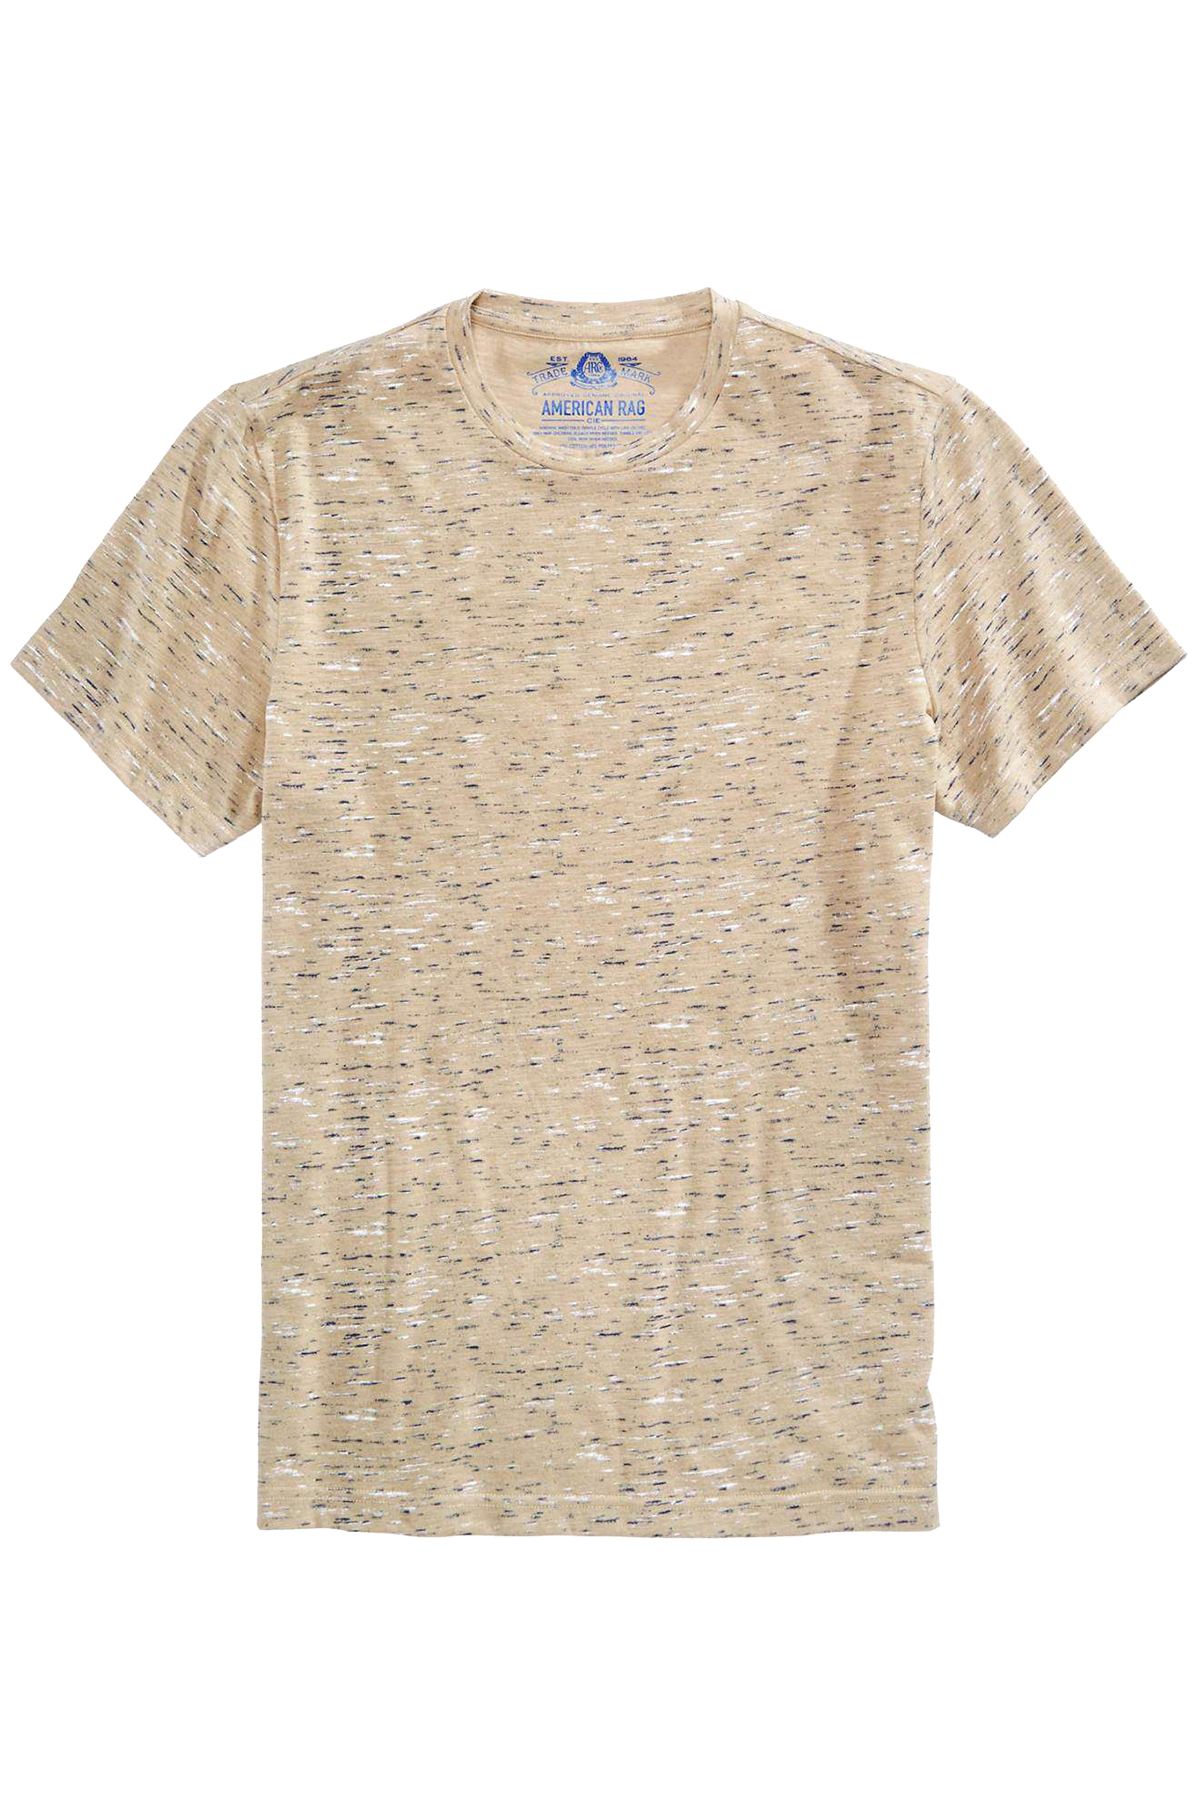 American Rag Hummus-Beige Textured T-Shirt